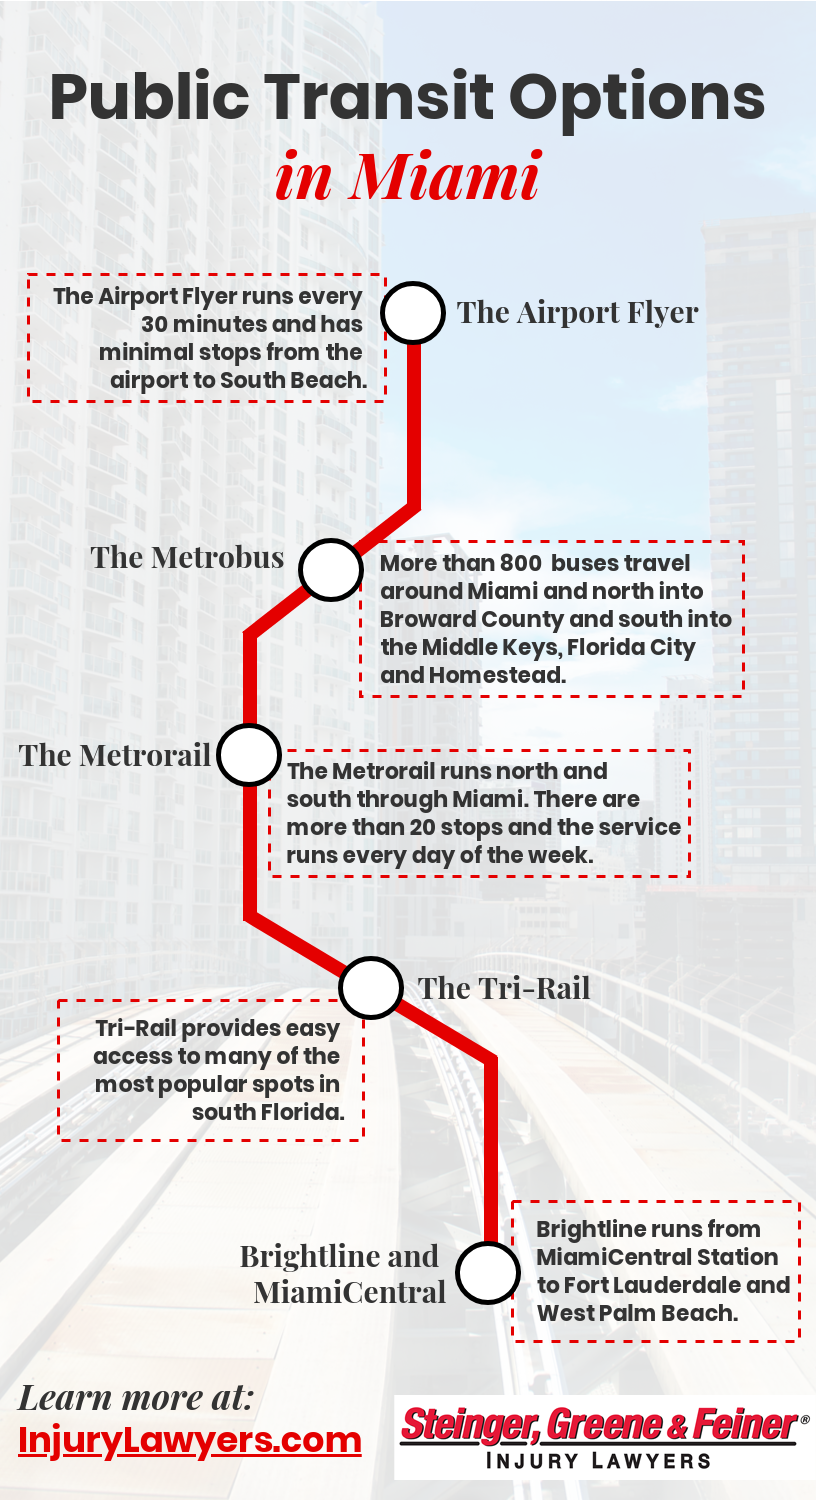 Public Transit Options in Miami infographic